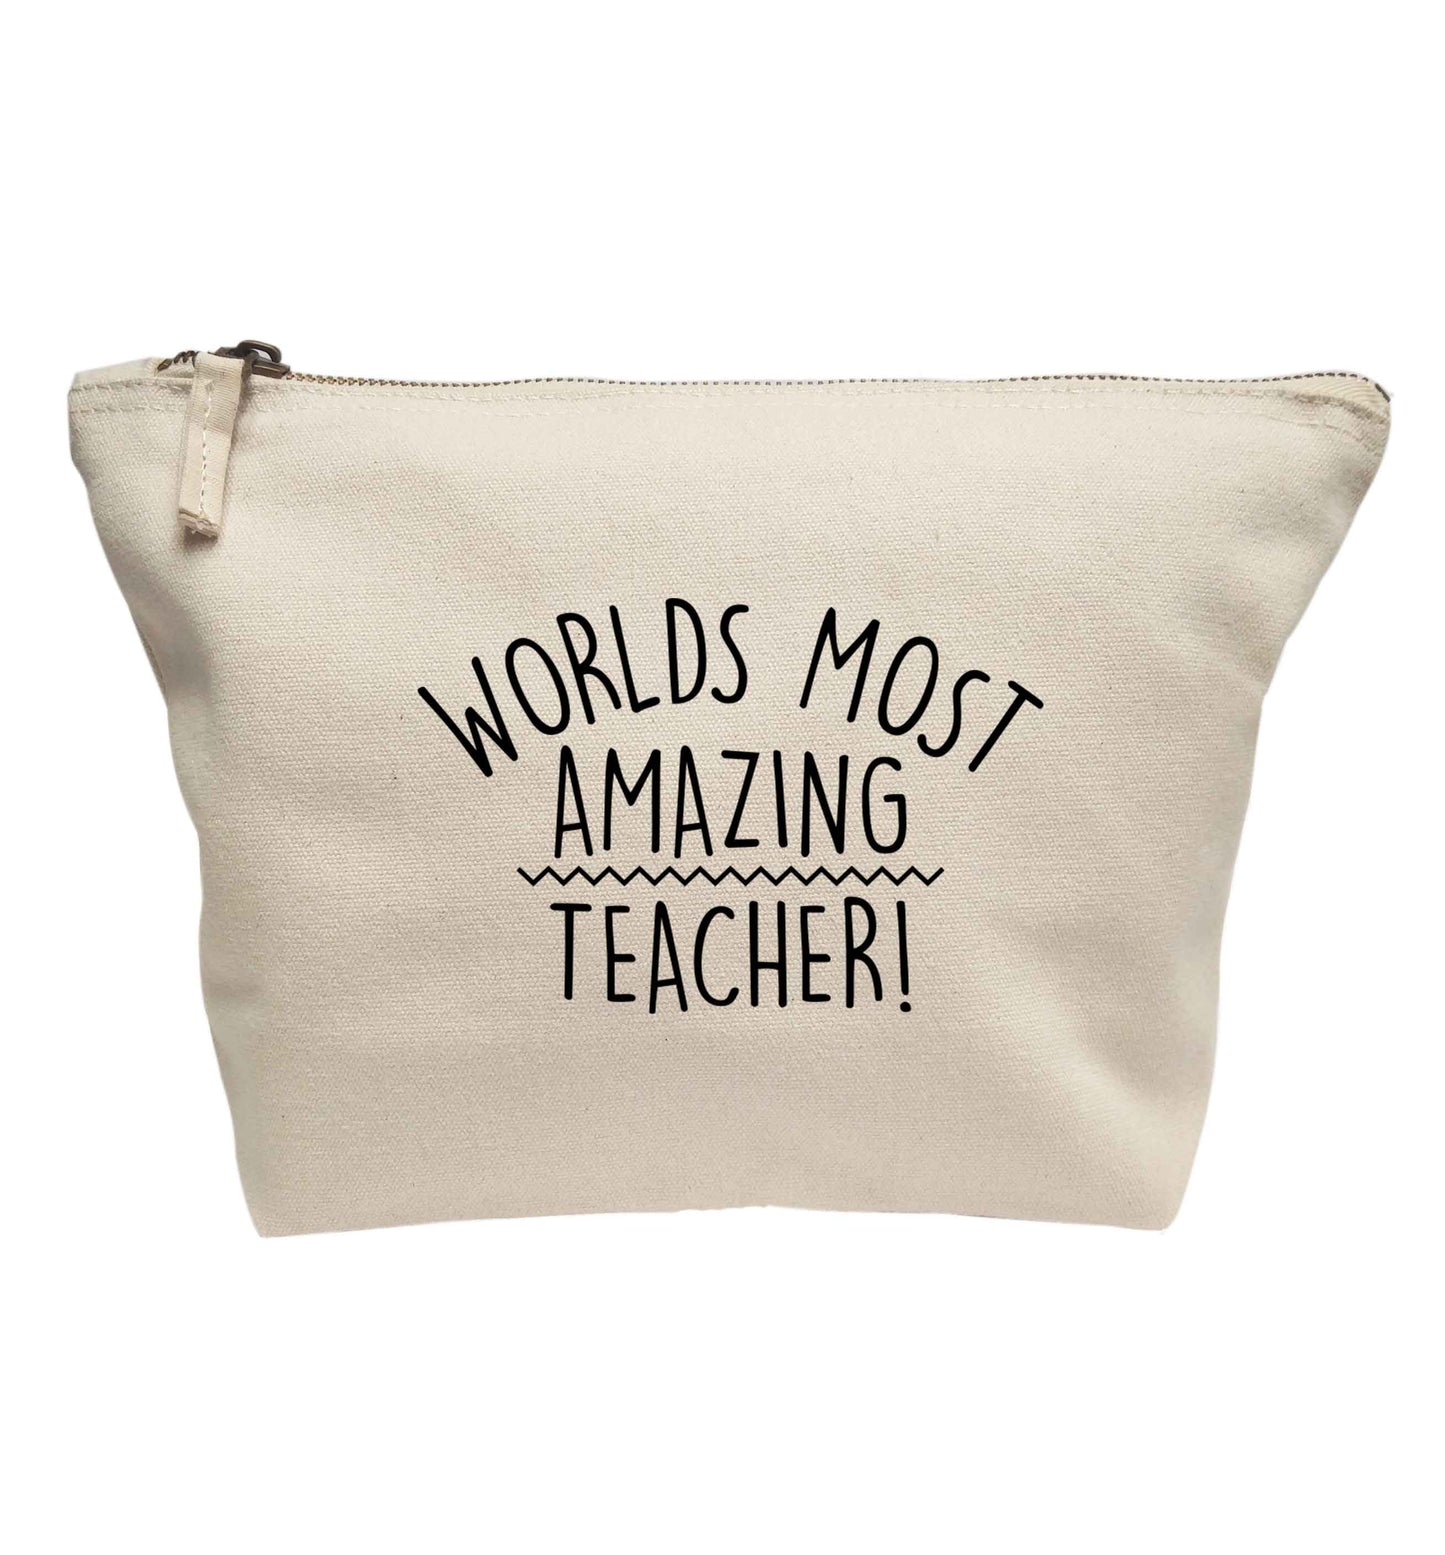 Worlds most amazing teacher | Makeup / wash bag